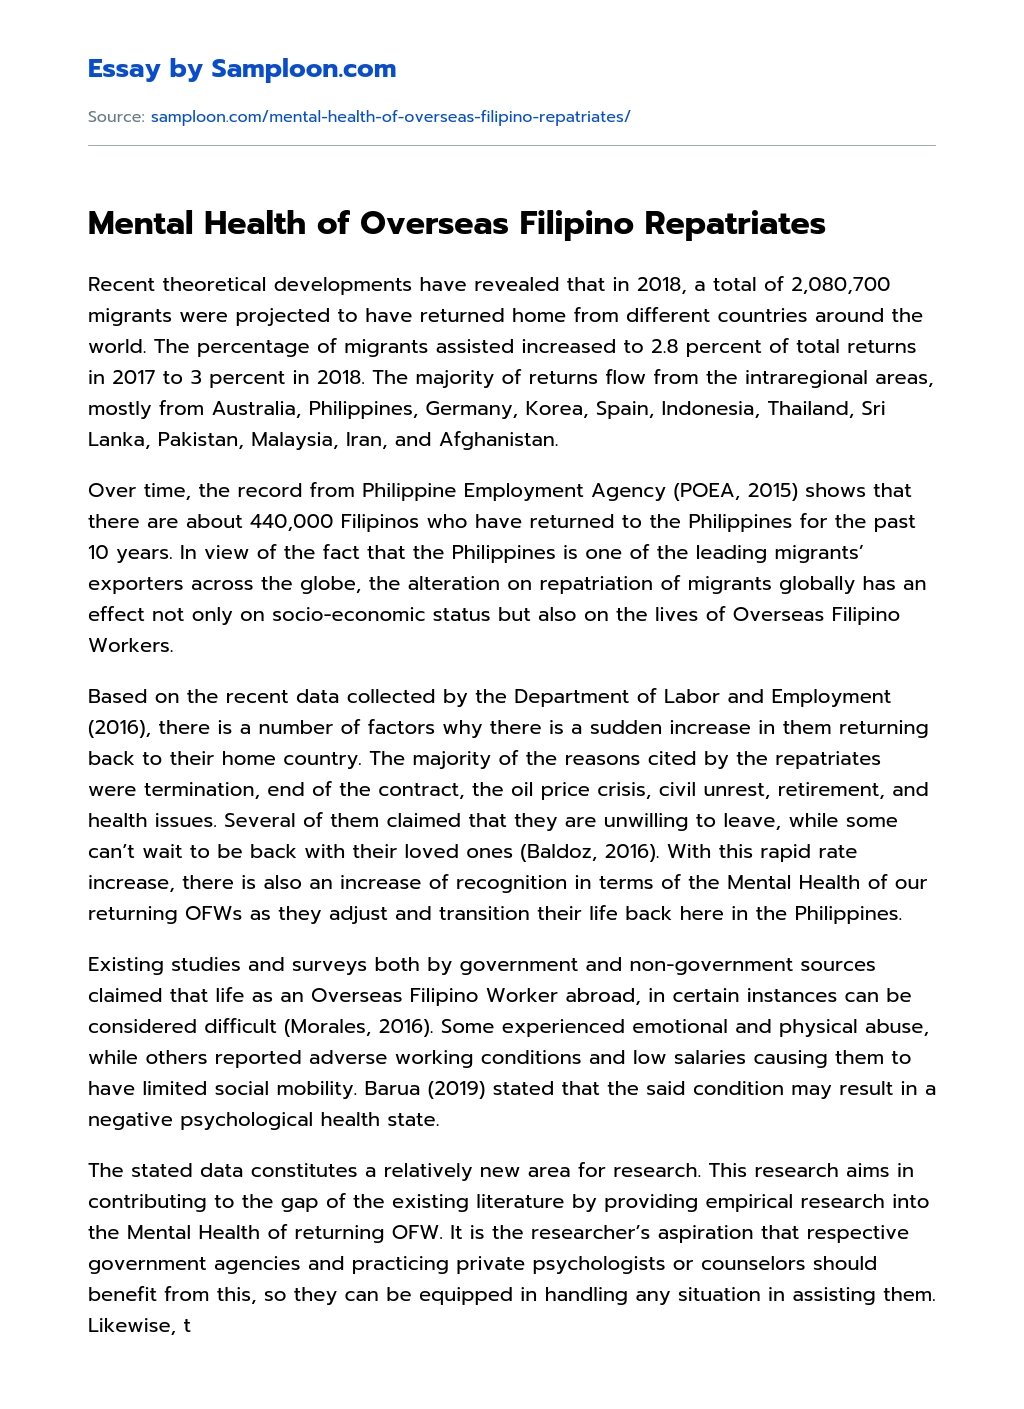 Mental Health of Overseas Filipino Repatriates essay